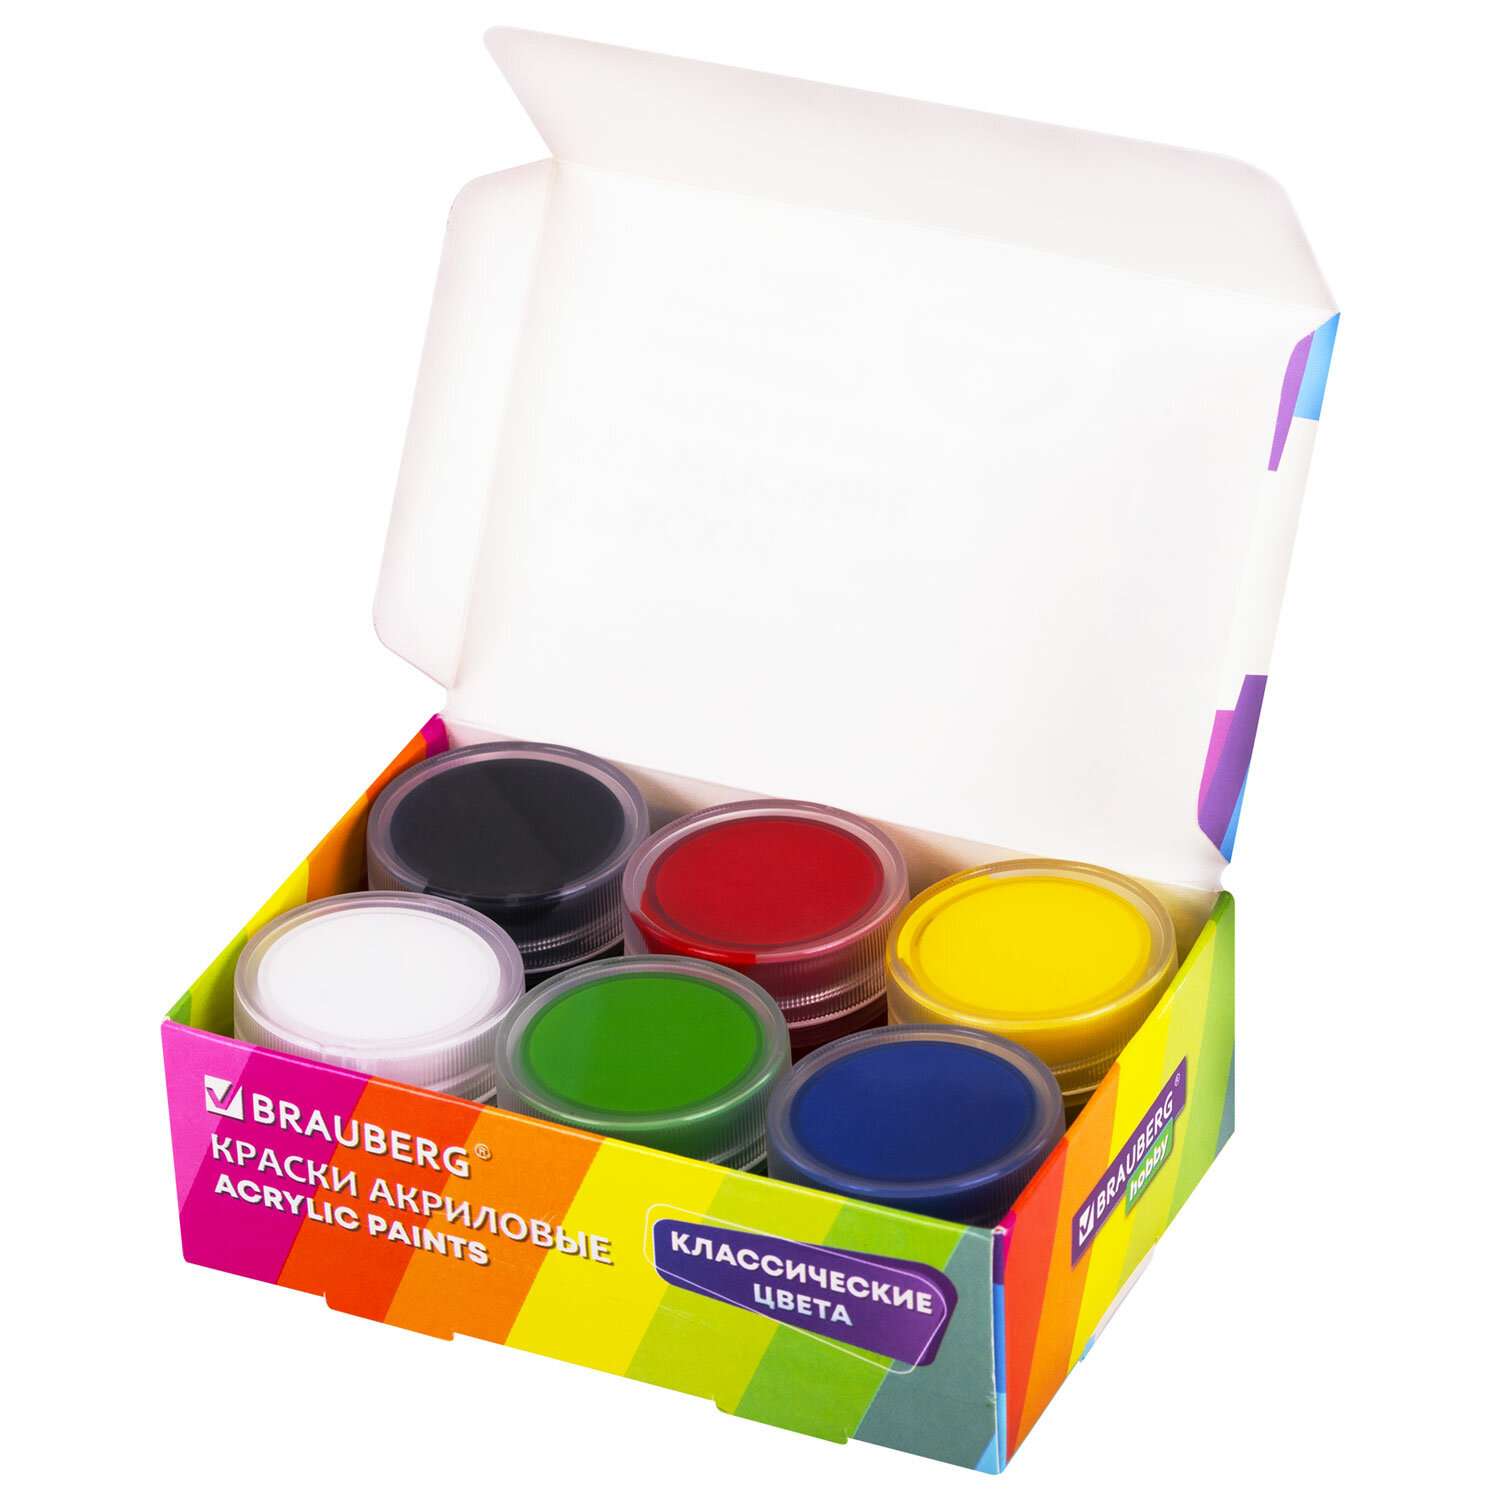 Краски акриловые Brauberg набор для рисования 6 цветов по 10 мл - фото 5